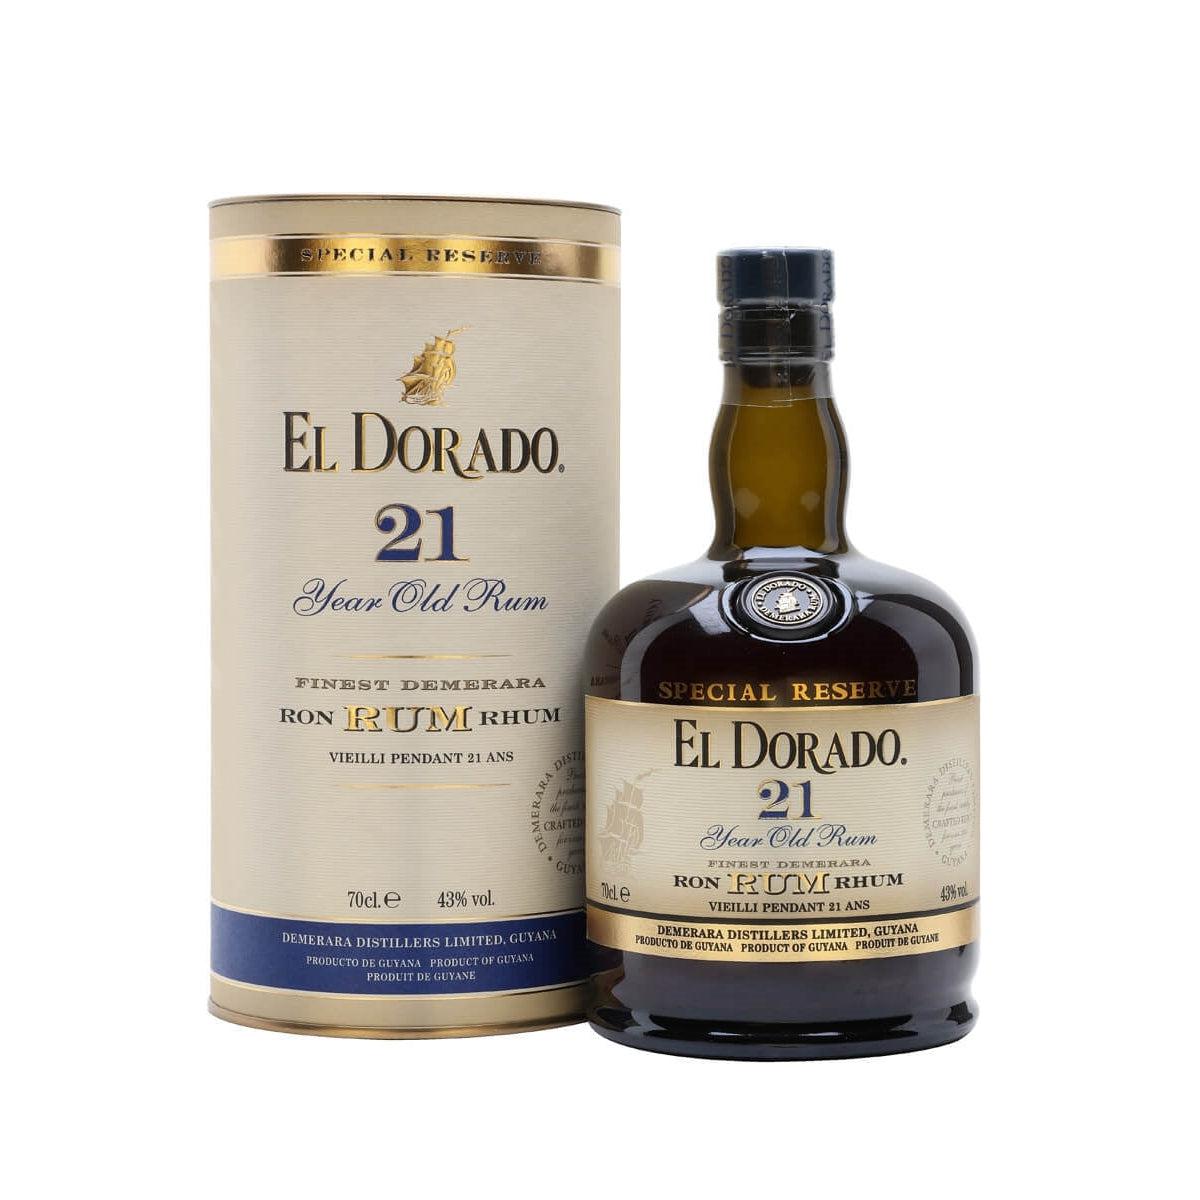 El Dorado Rum 21 Year Old Rum 750ml